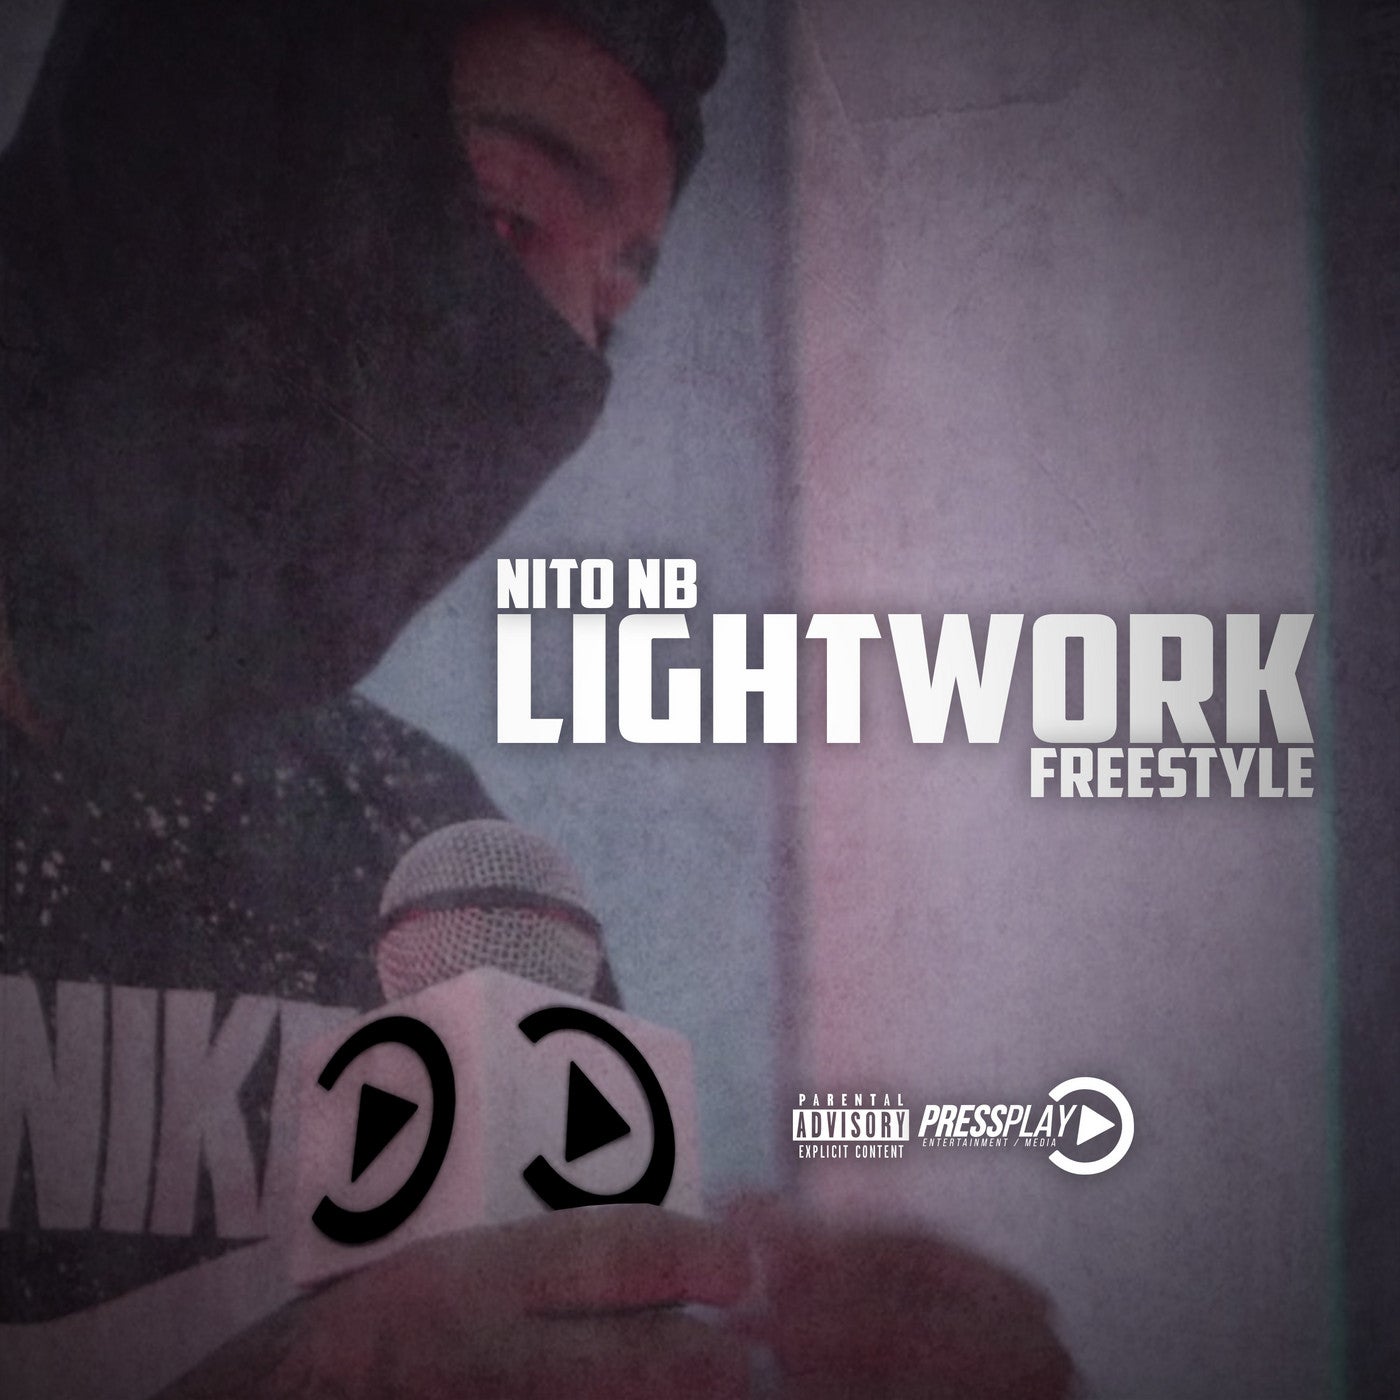 Lightwork - song and lyrics by Alz X 38, Pressplay